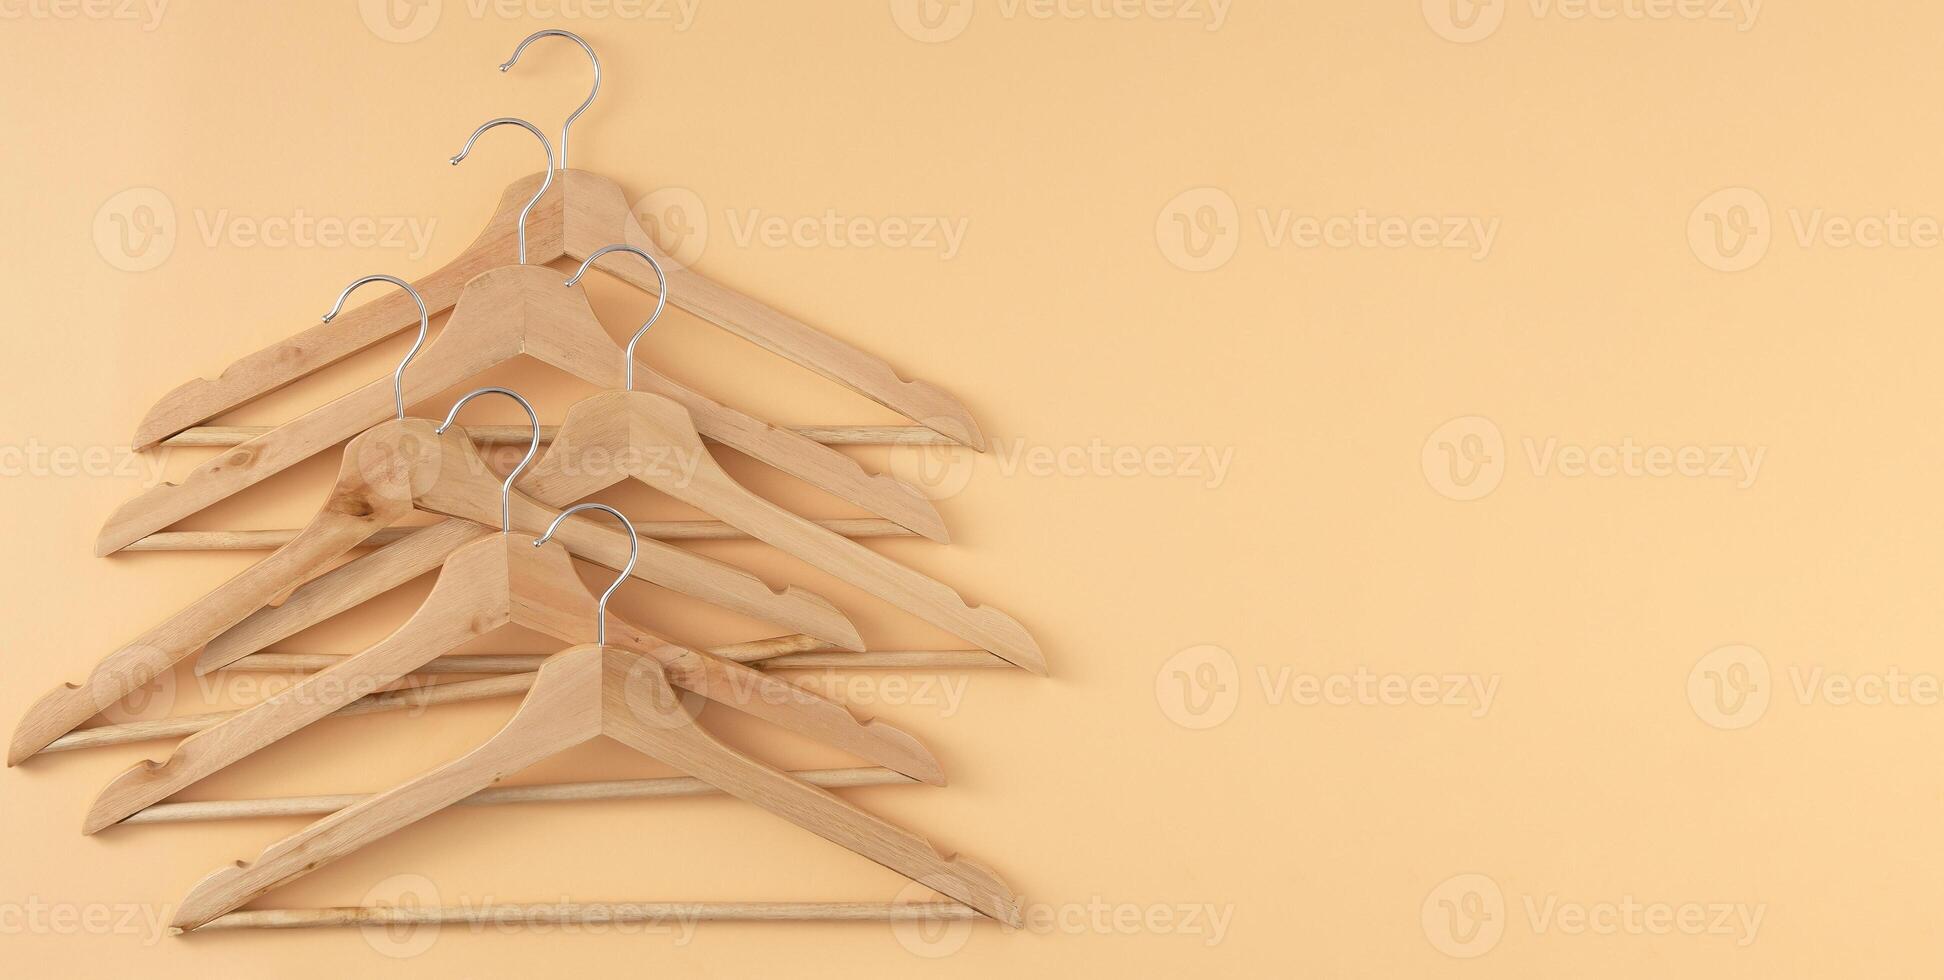 Hangers for clothes. Hanger set. Beige background copy space banner. Wooden hangers. Store shop photo